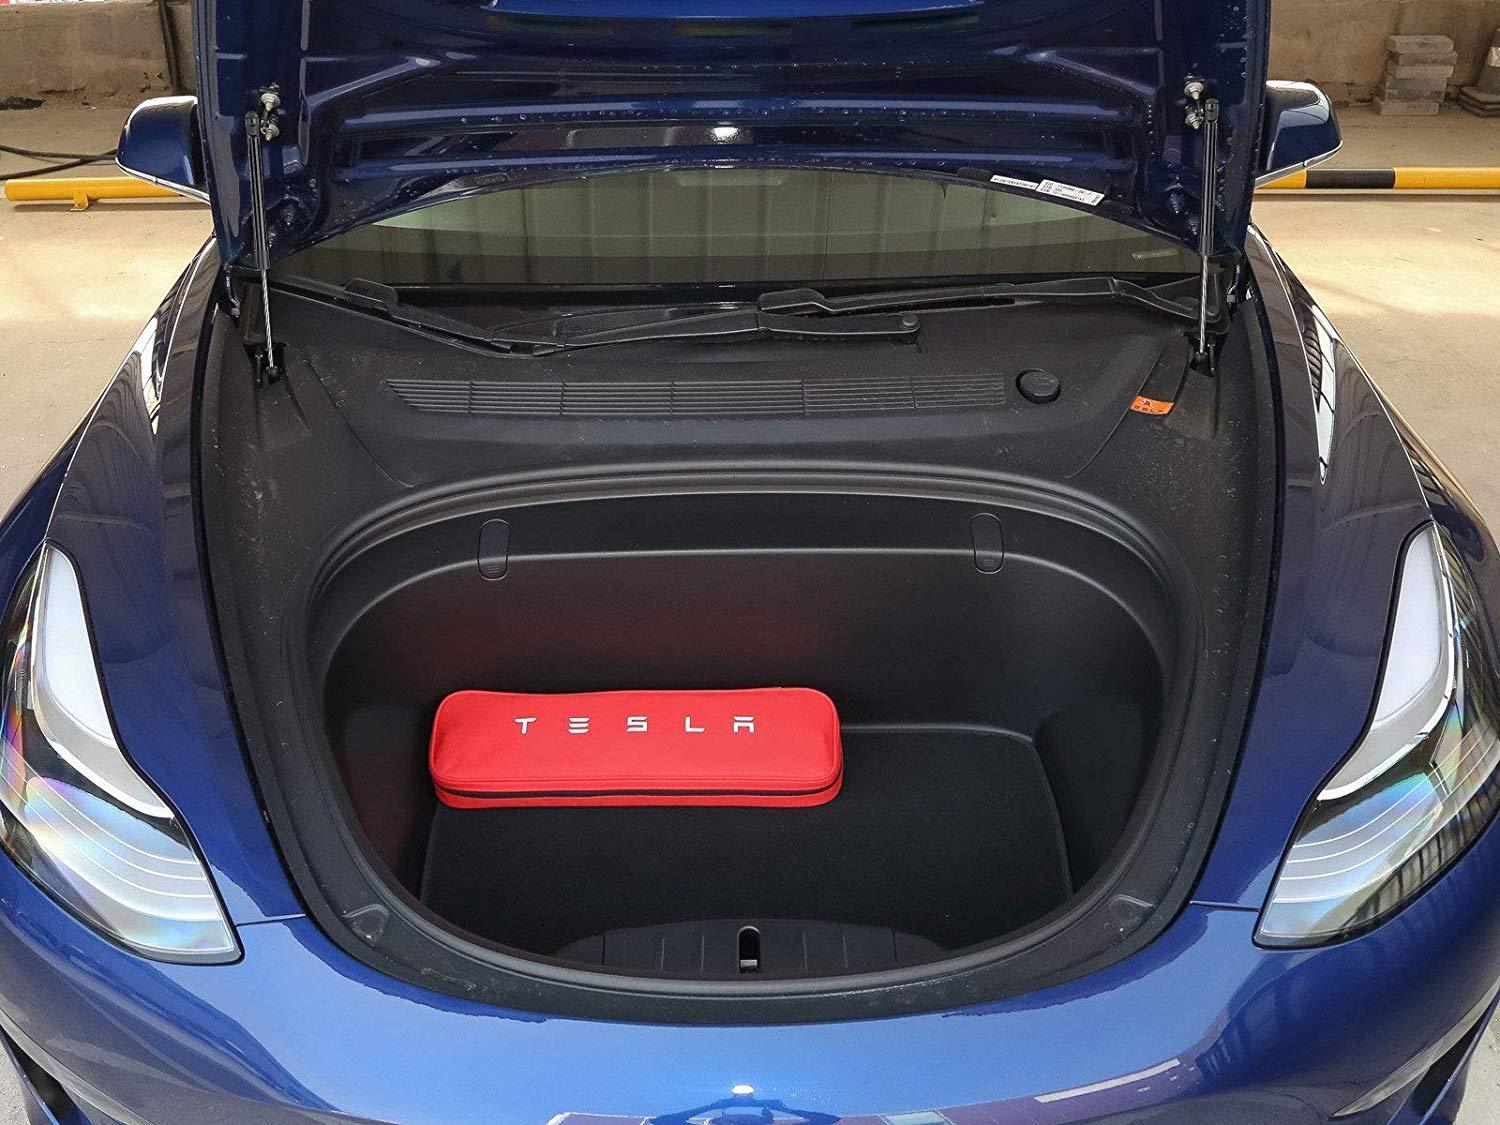 Tesla Model 3 Frunk Lift Supports